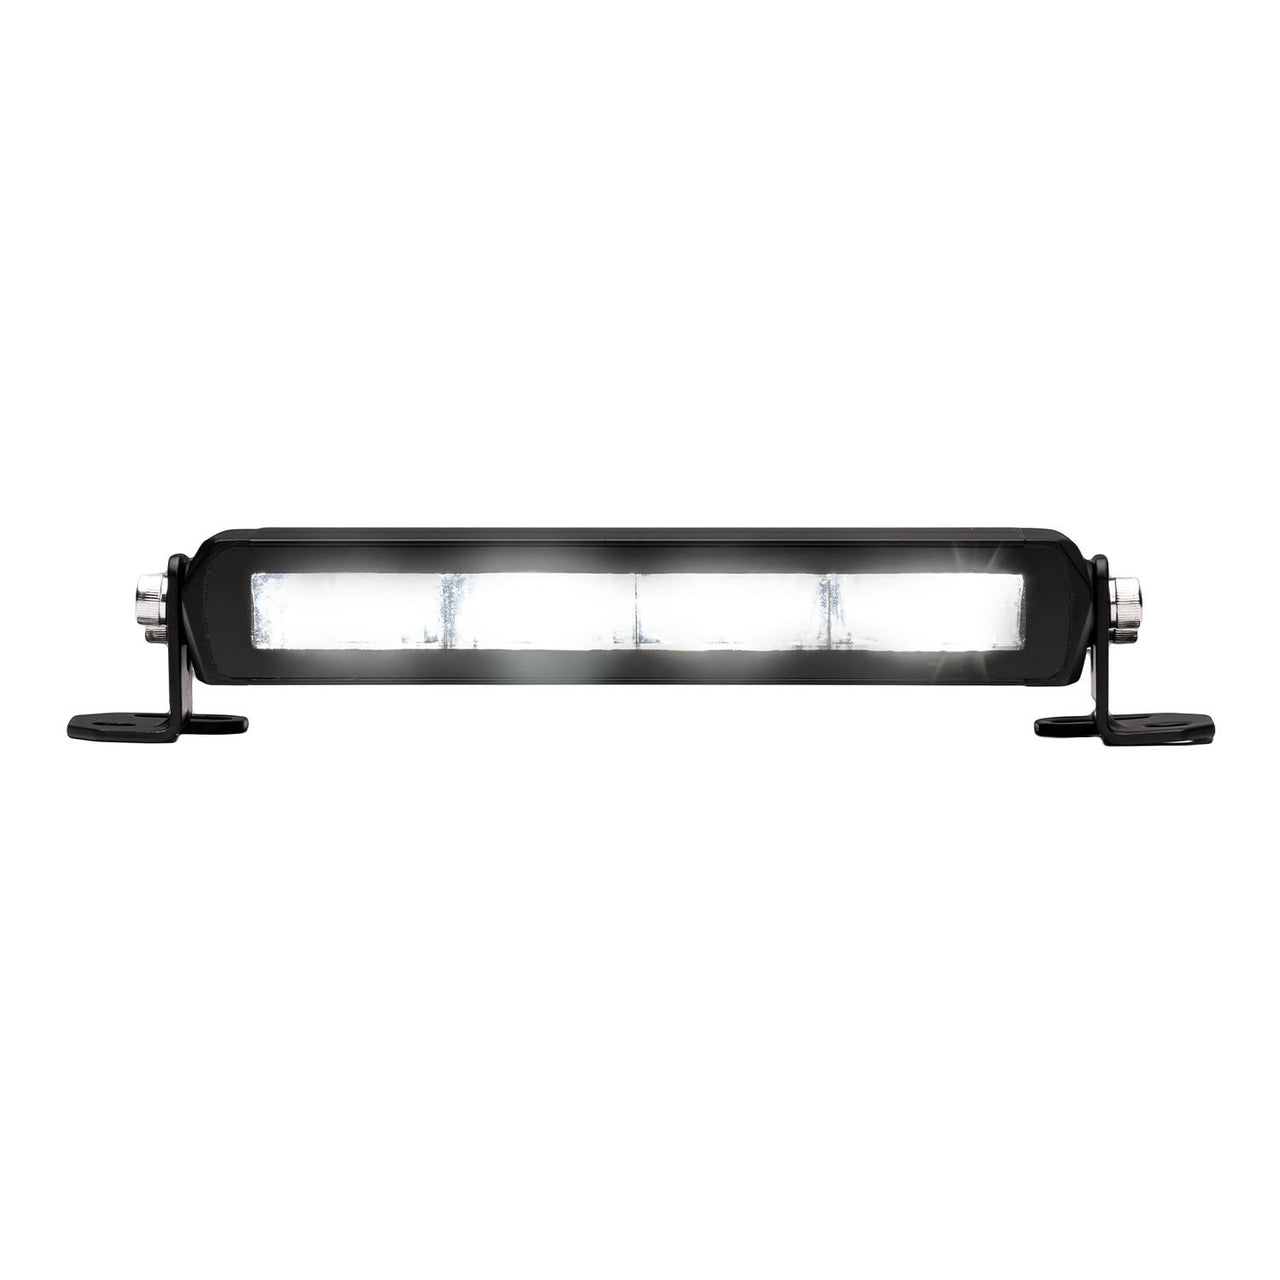 AUTOTEK ATO9BV1 9-inch Half Optic LED Lightbar, outdoor rated 1500 lumen.